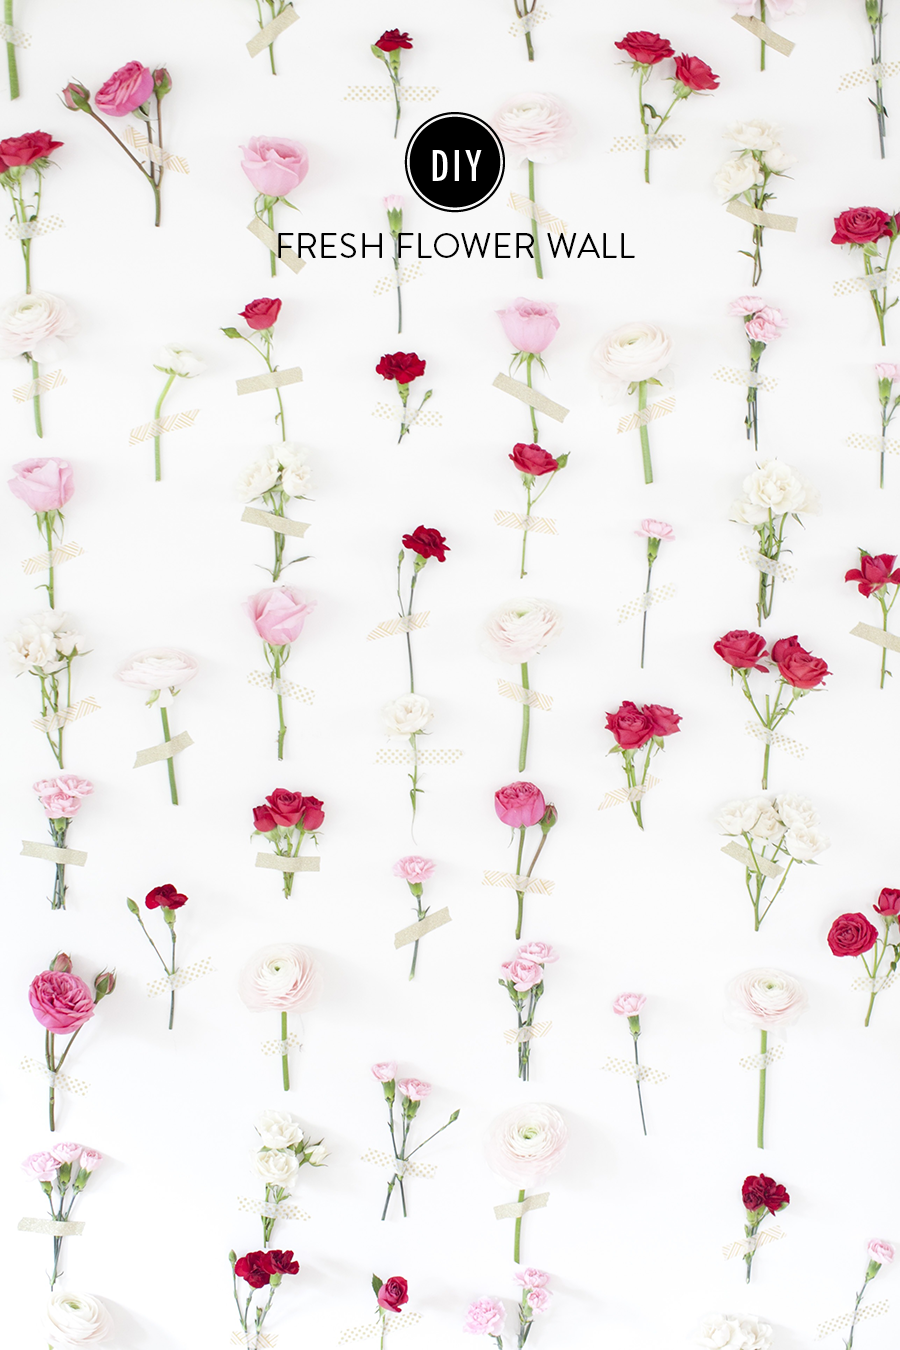 The Easiest DIY Fresh Flower Wall